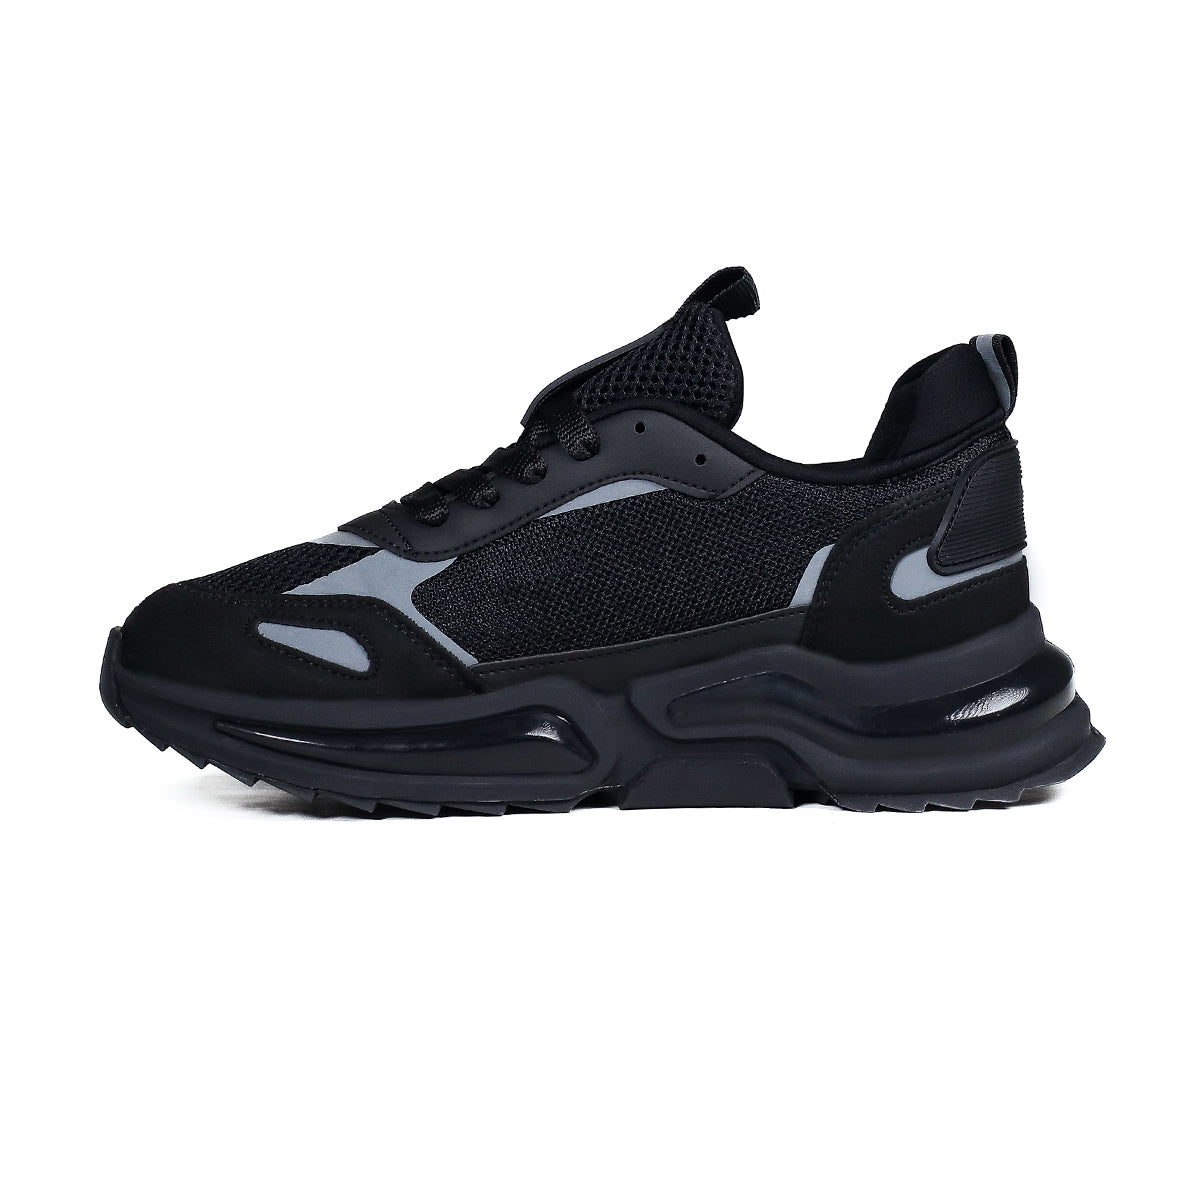 DI MILANO Siyah Beyaz Erkek Sneakers Spor Ayakkabı